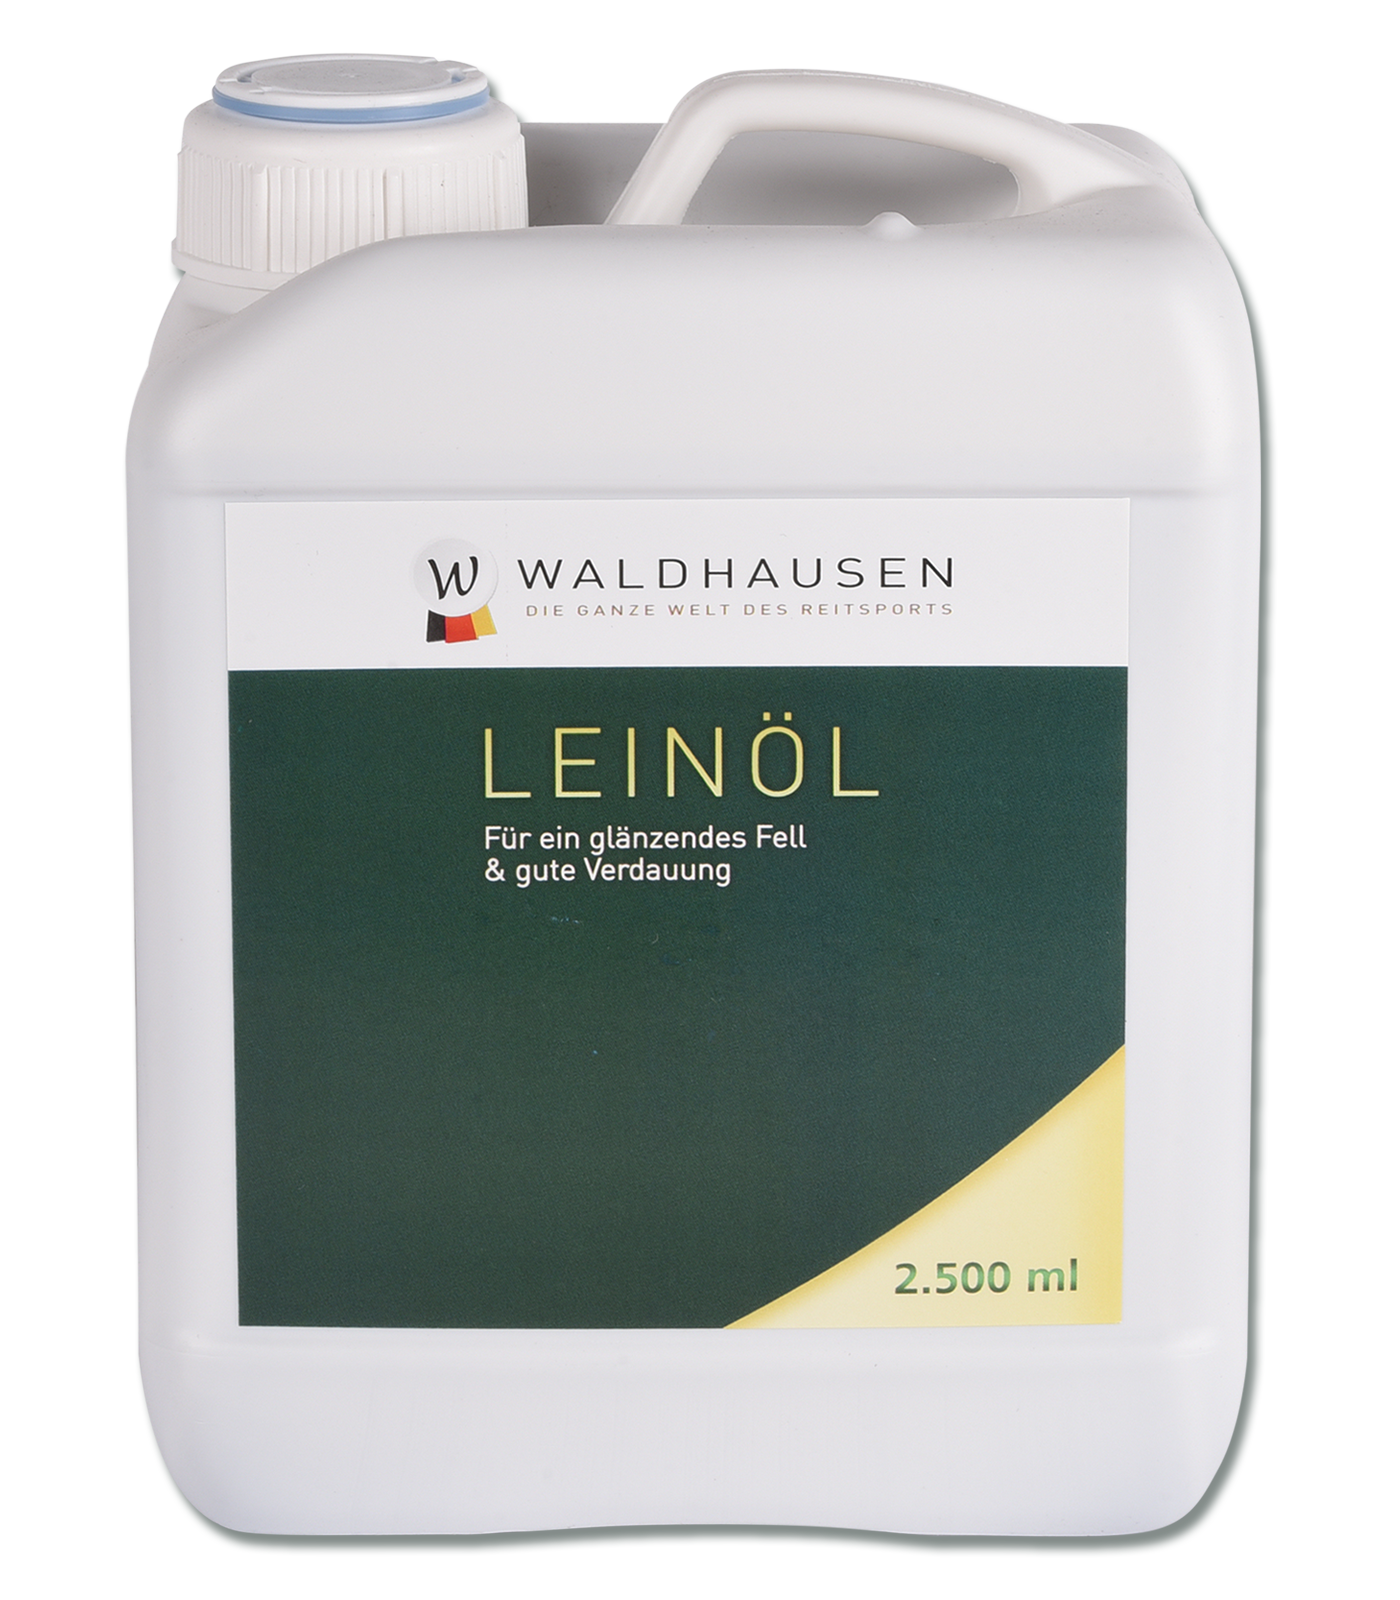 Lein-Öl - Für Fell & Verdauung, 2,5 l